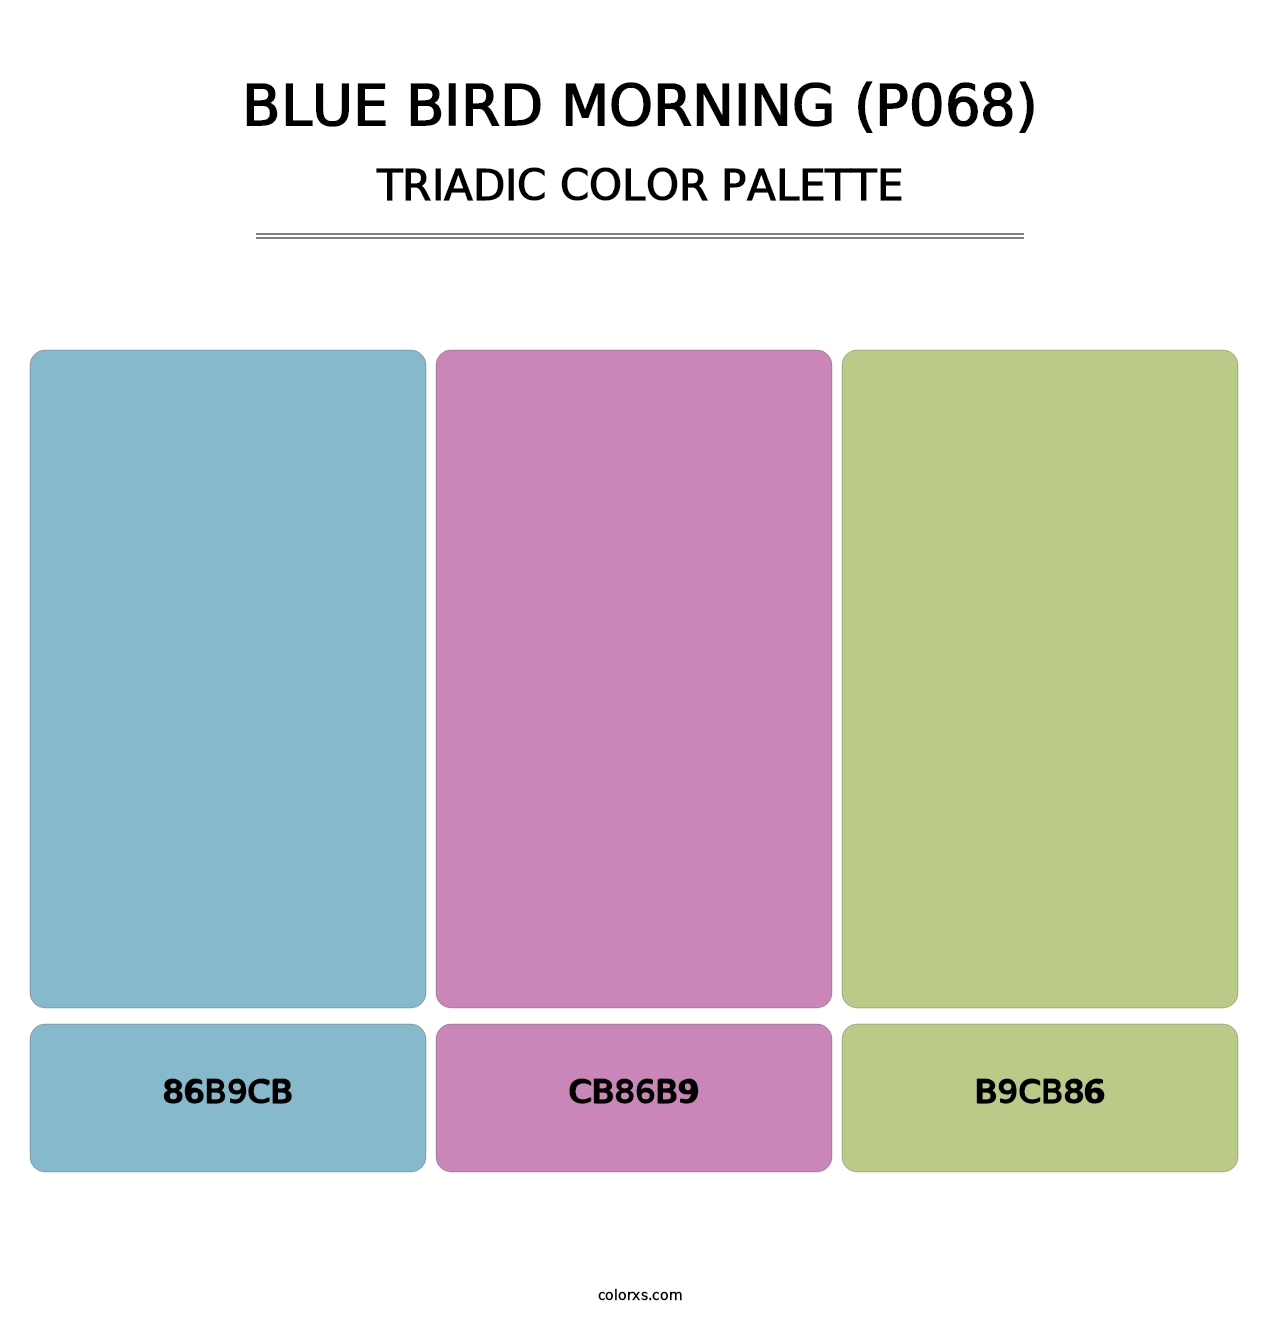 Blue Bird Morning (P068) - Triadic Color Palette